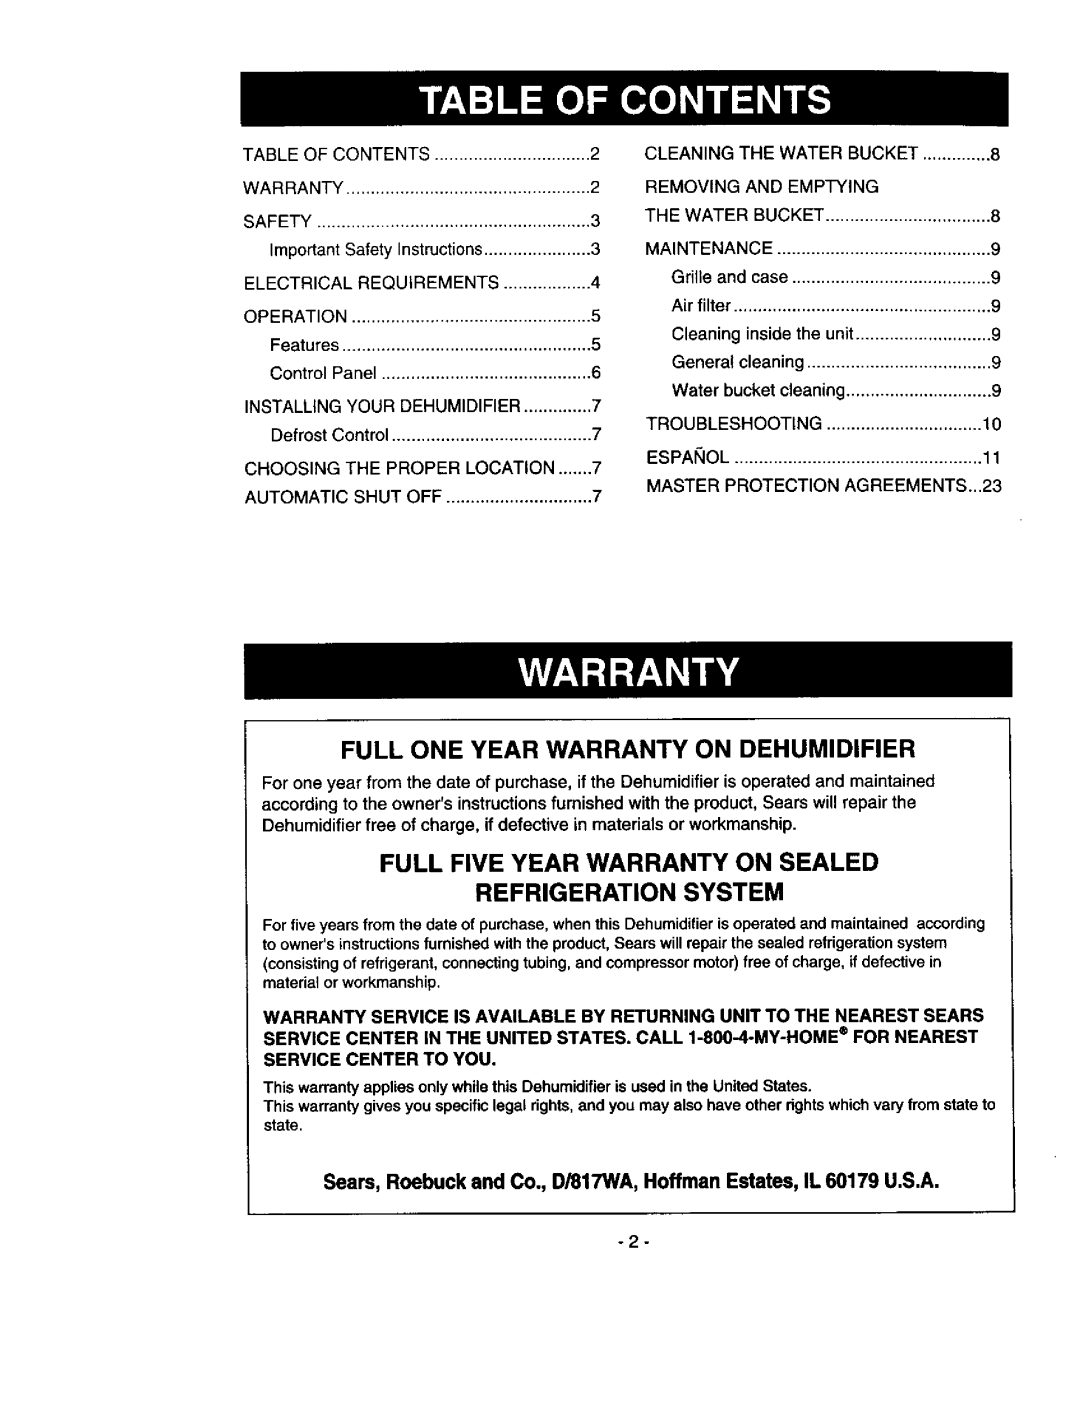 Kenmore 580.53301 Full Five Year Warranty On Sealed, Refrigeration System, Full One Year Warranty On Dehumidifier 